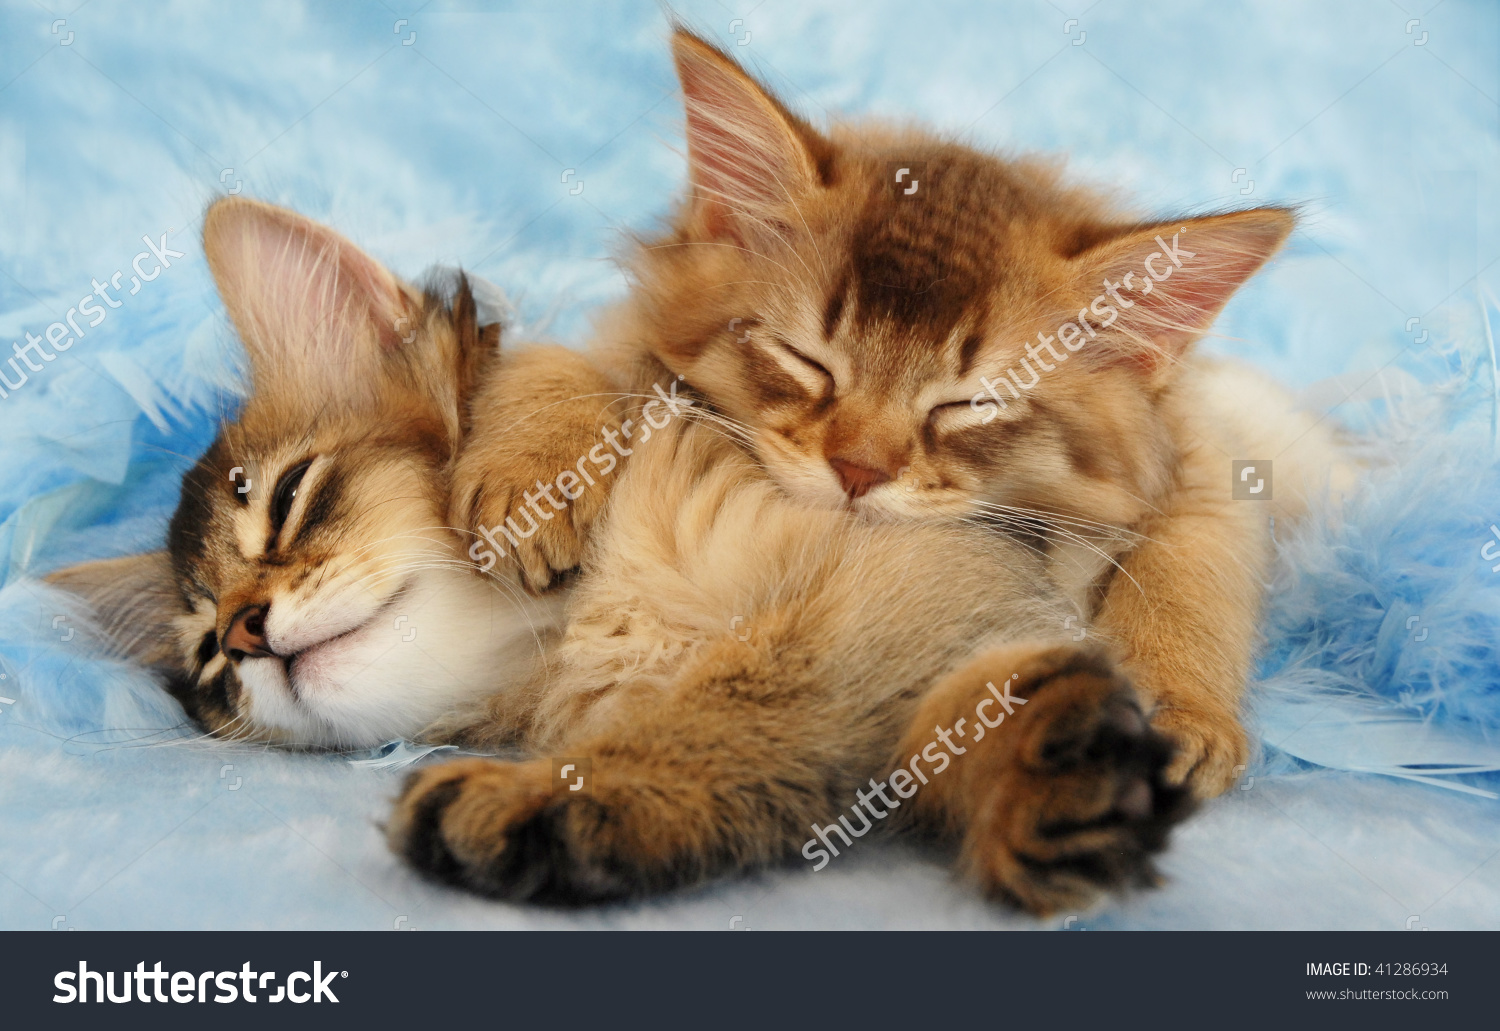 Two Sleeping Somali Kittens